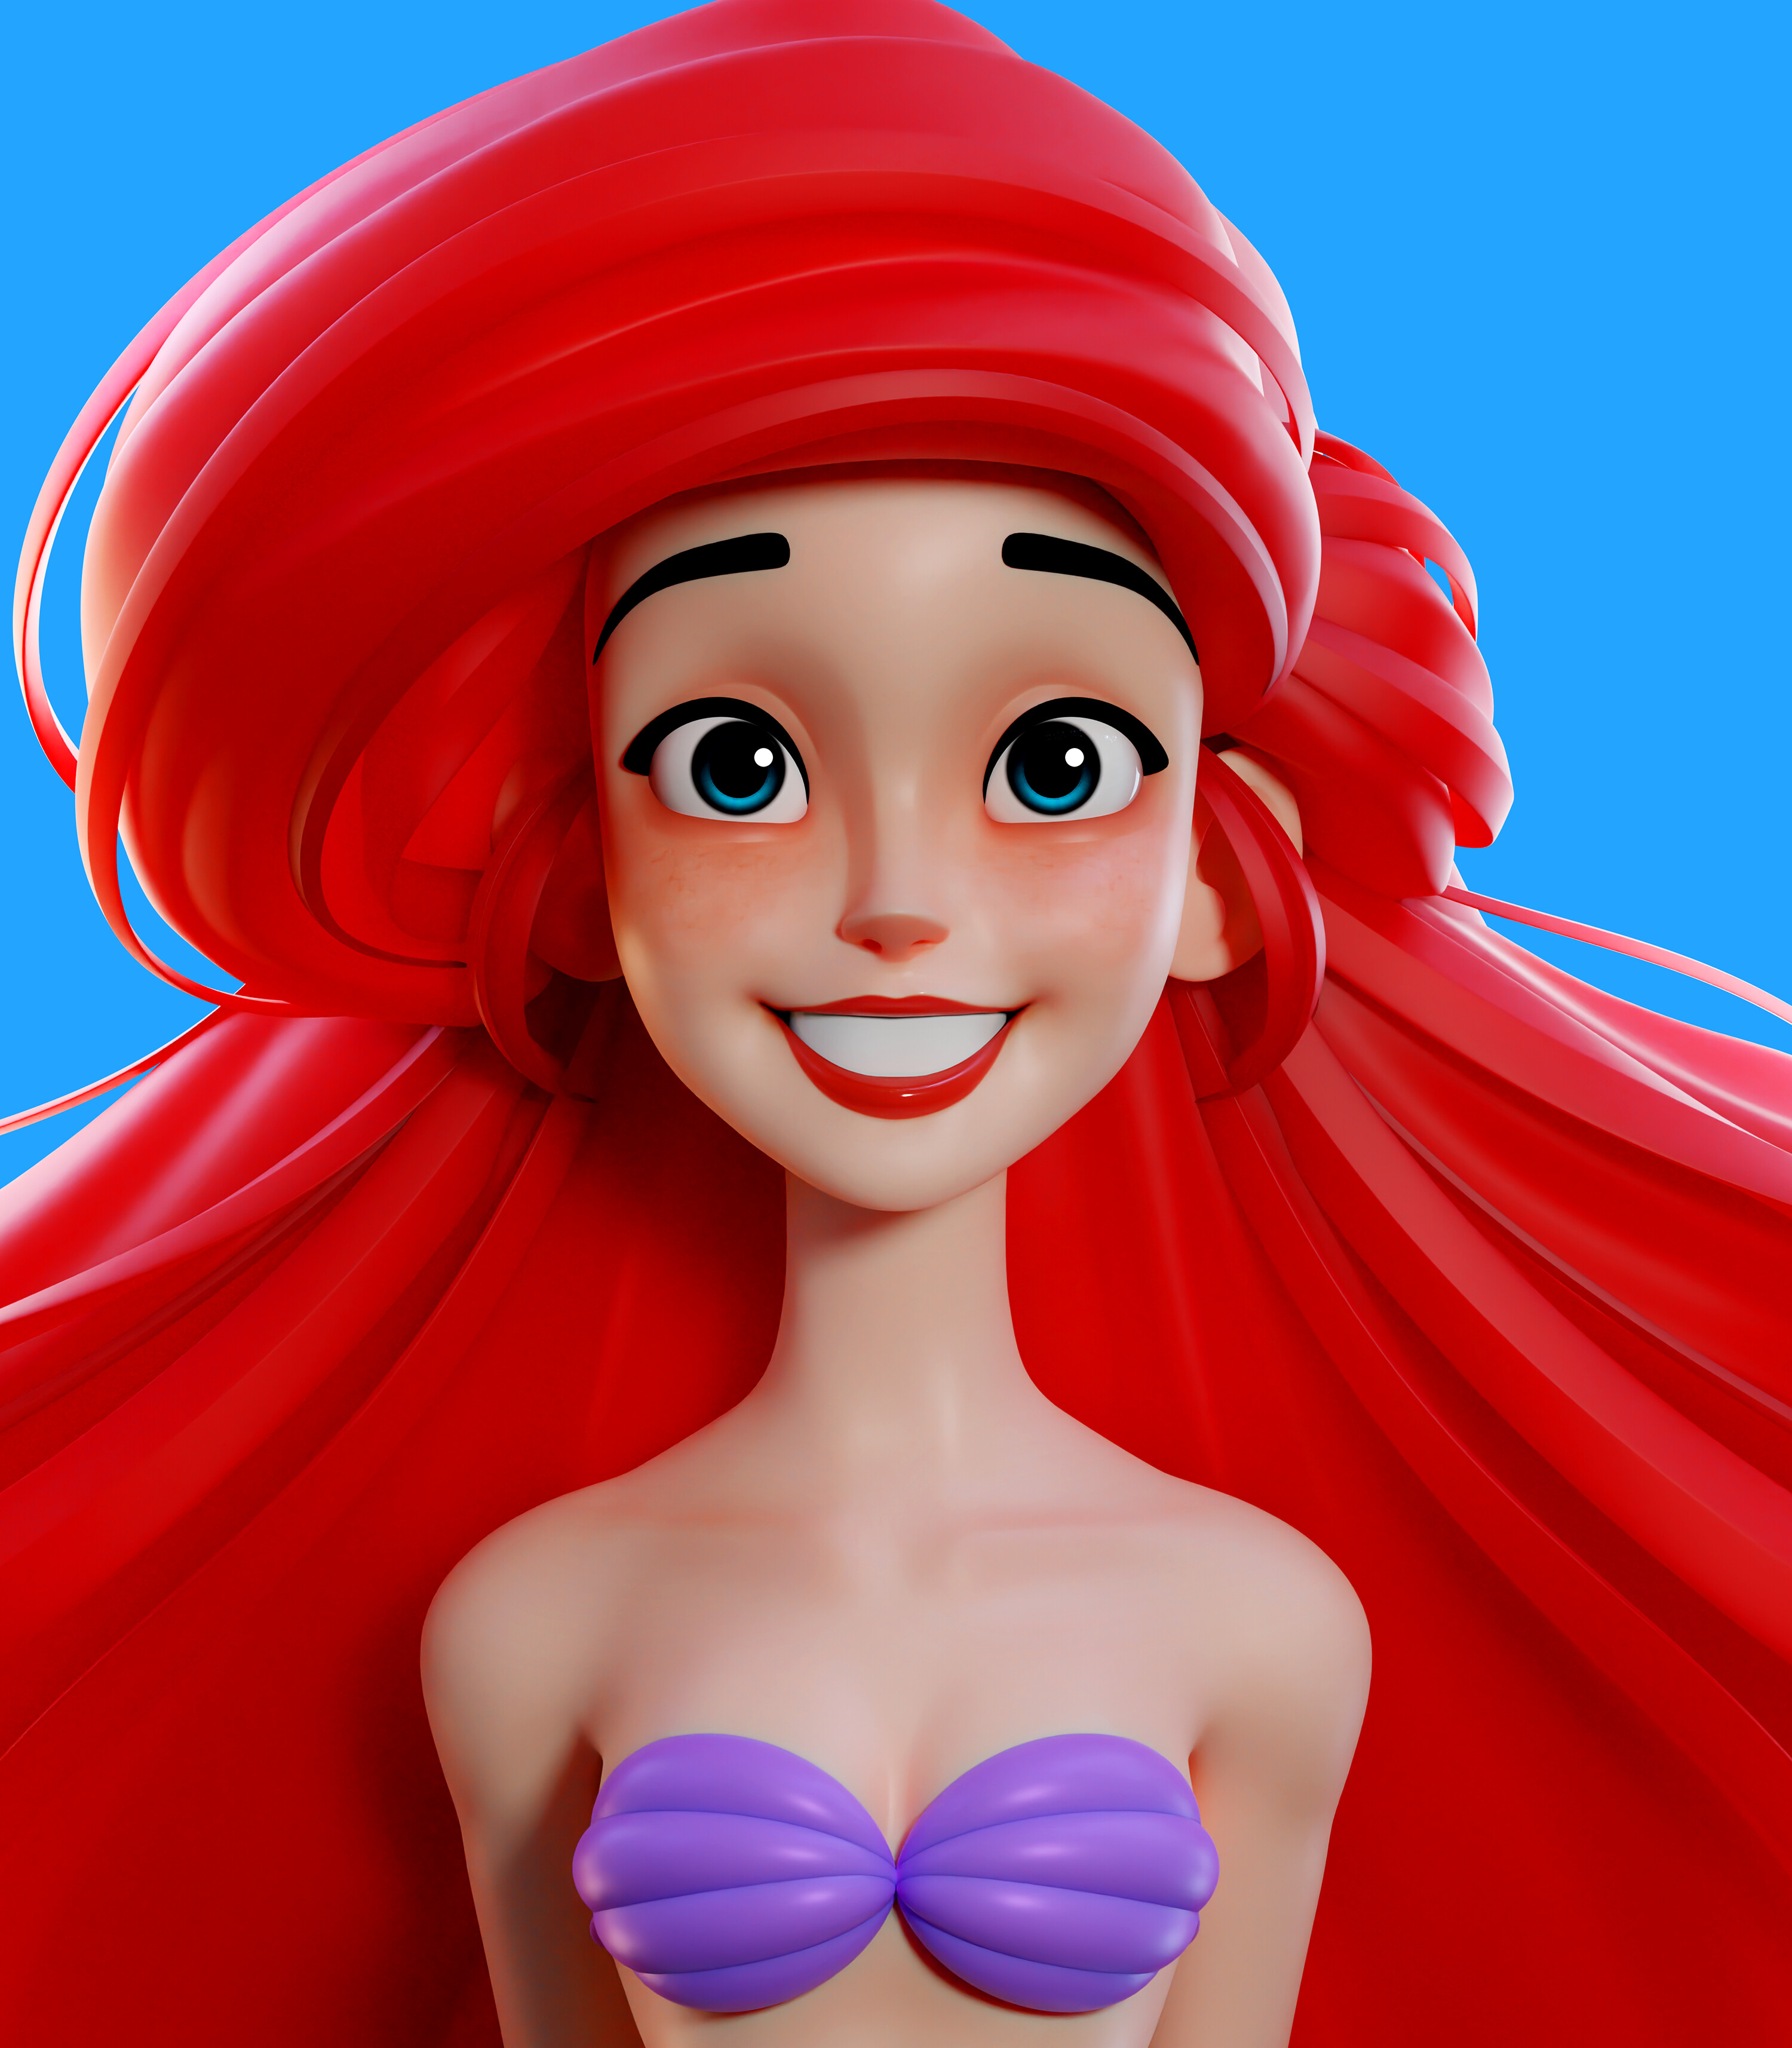 ben matalon share pics of ariel the little mermaid photos